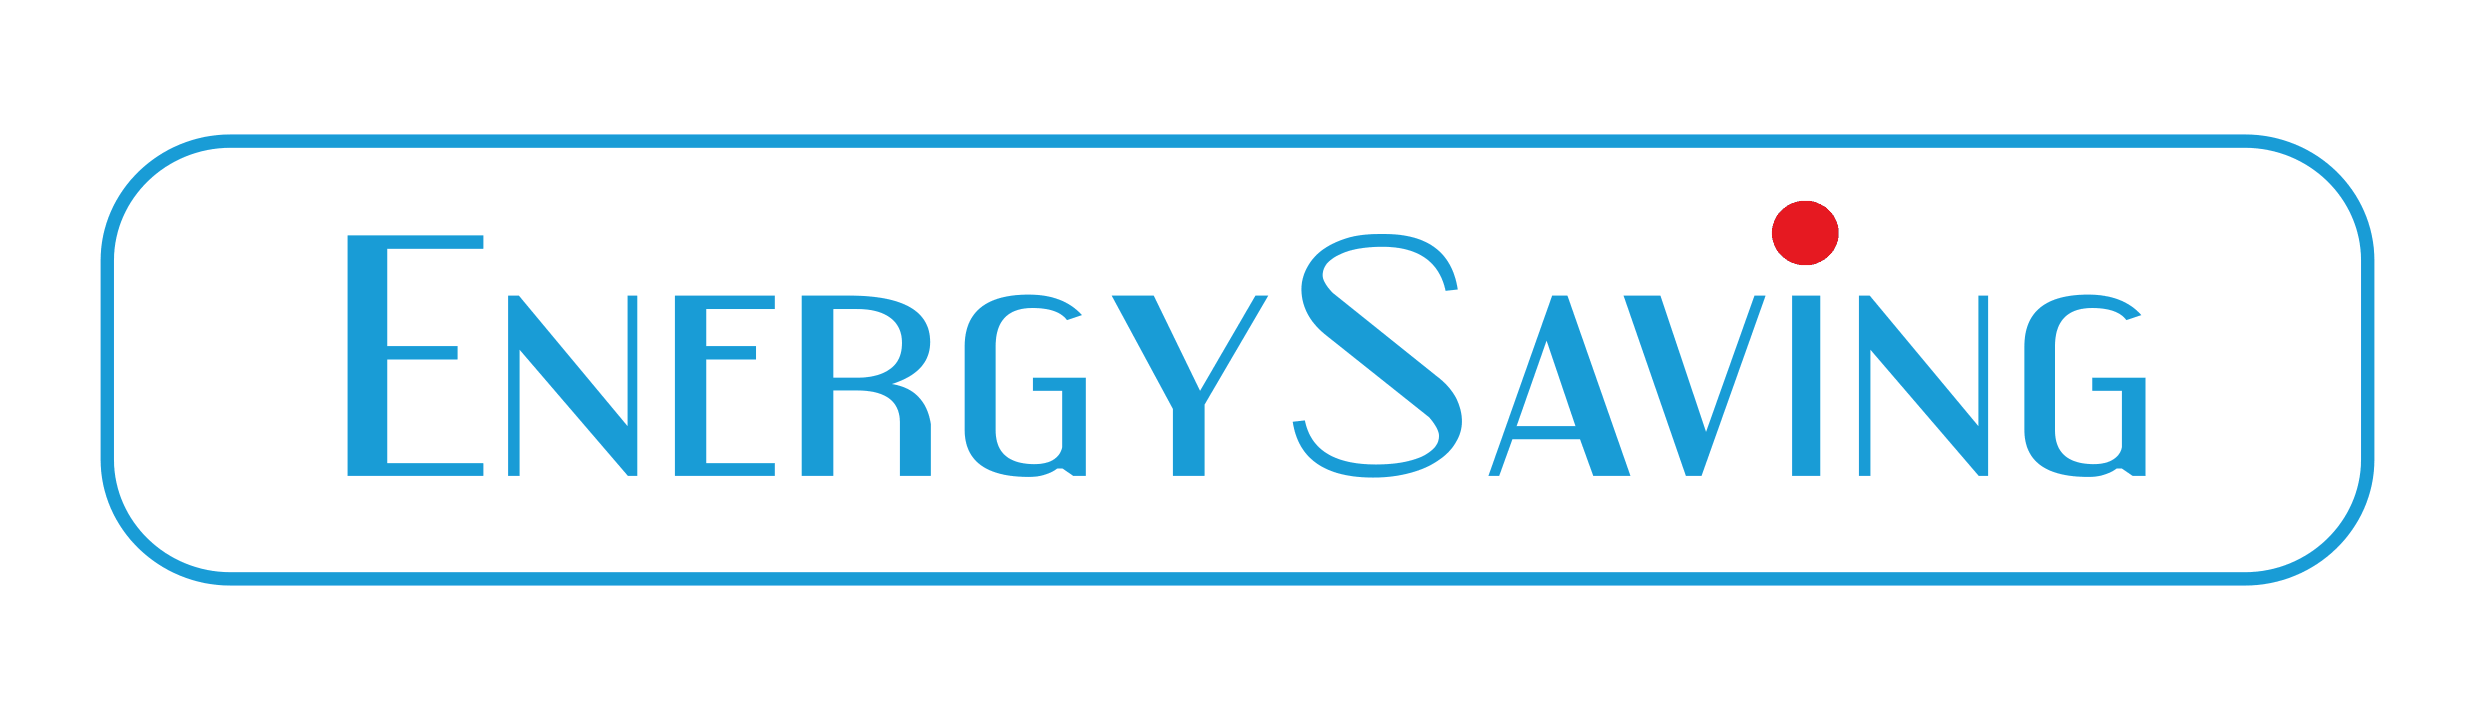 Energysaving Logo23